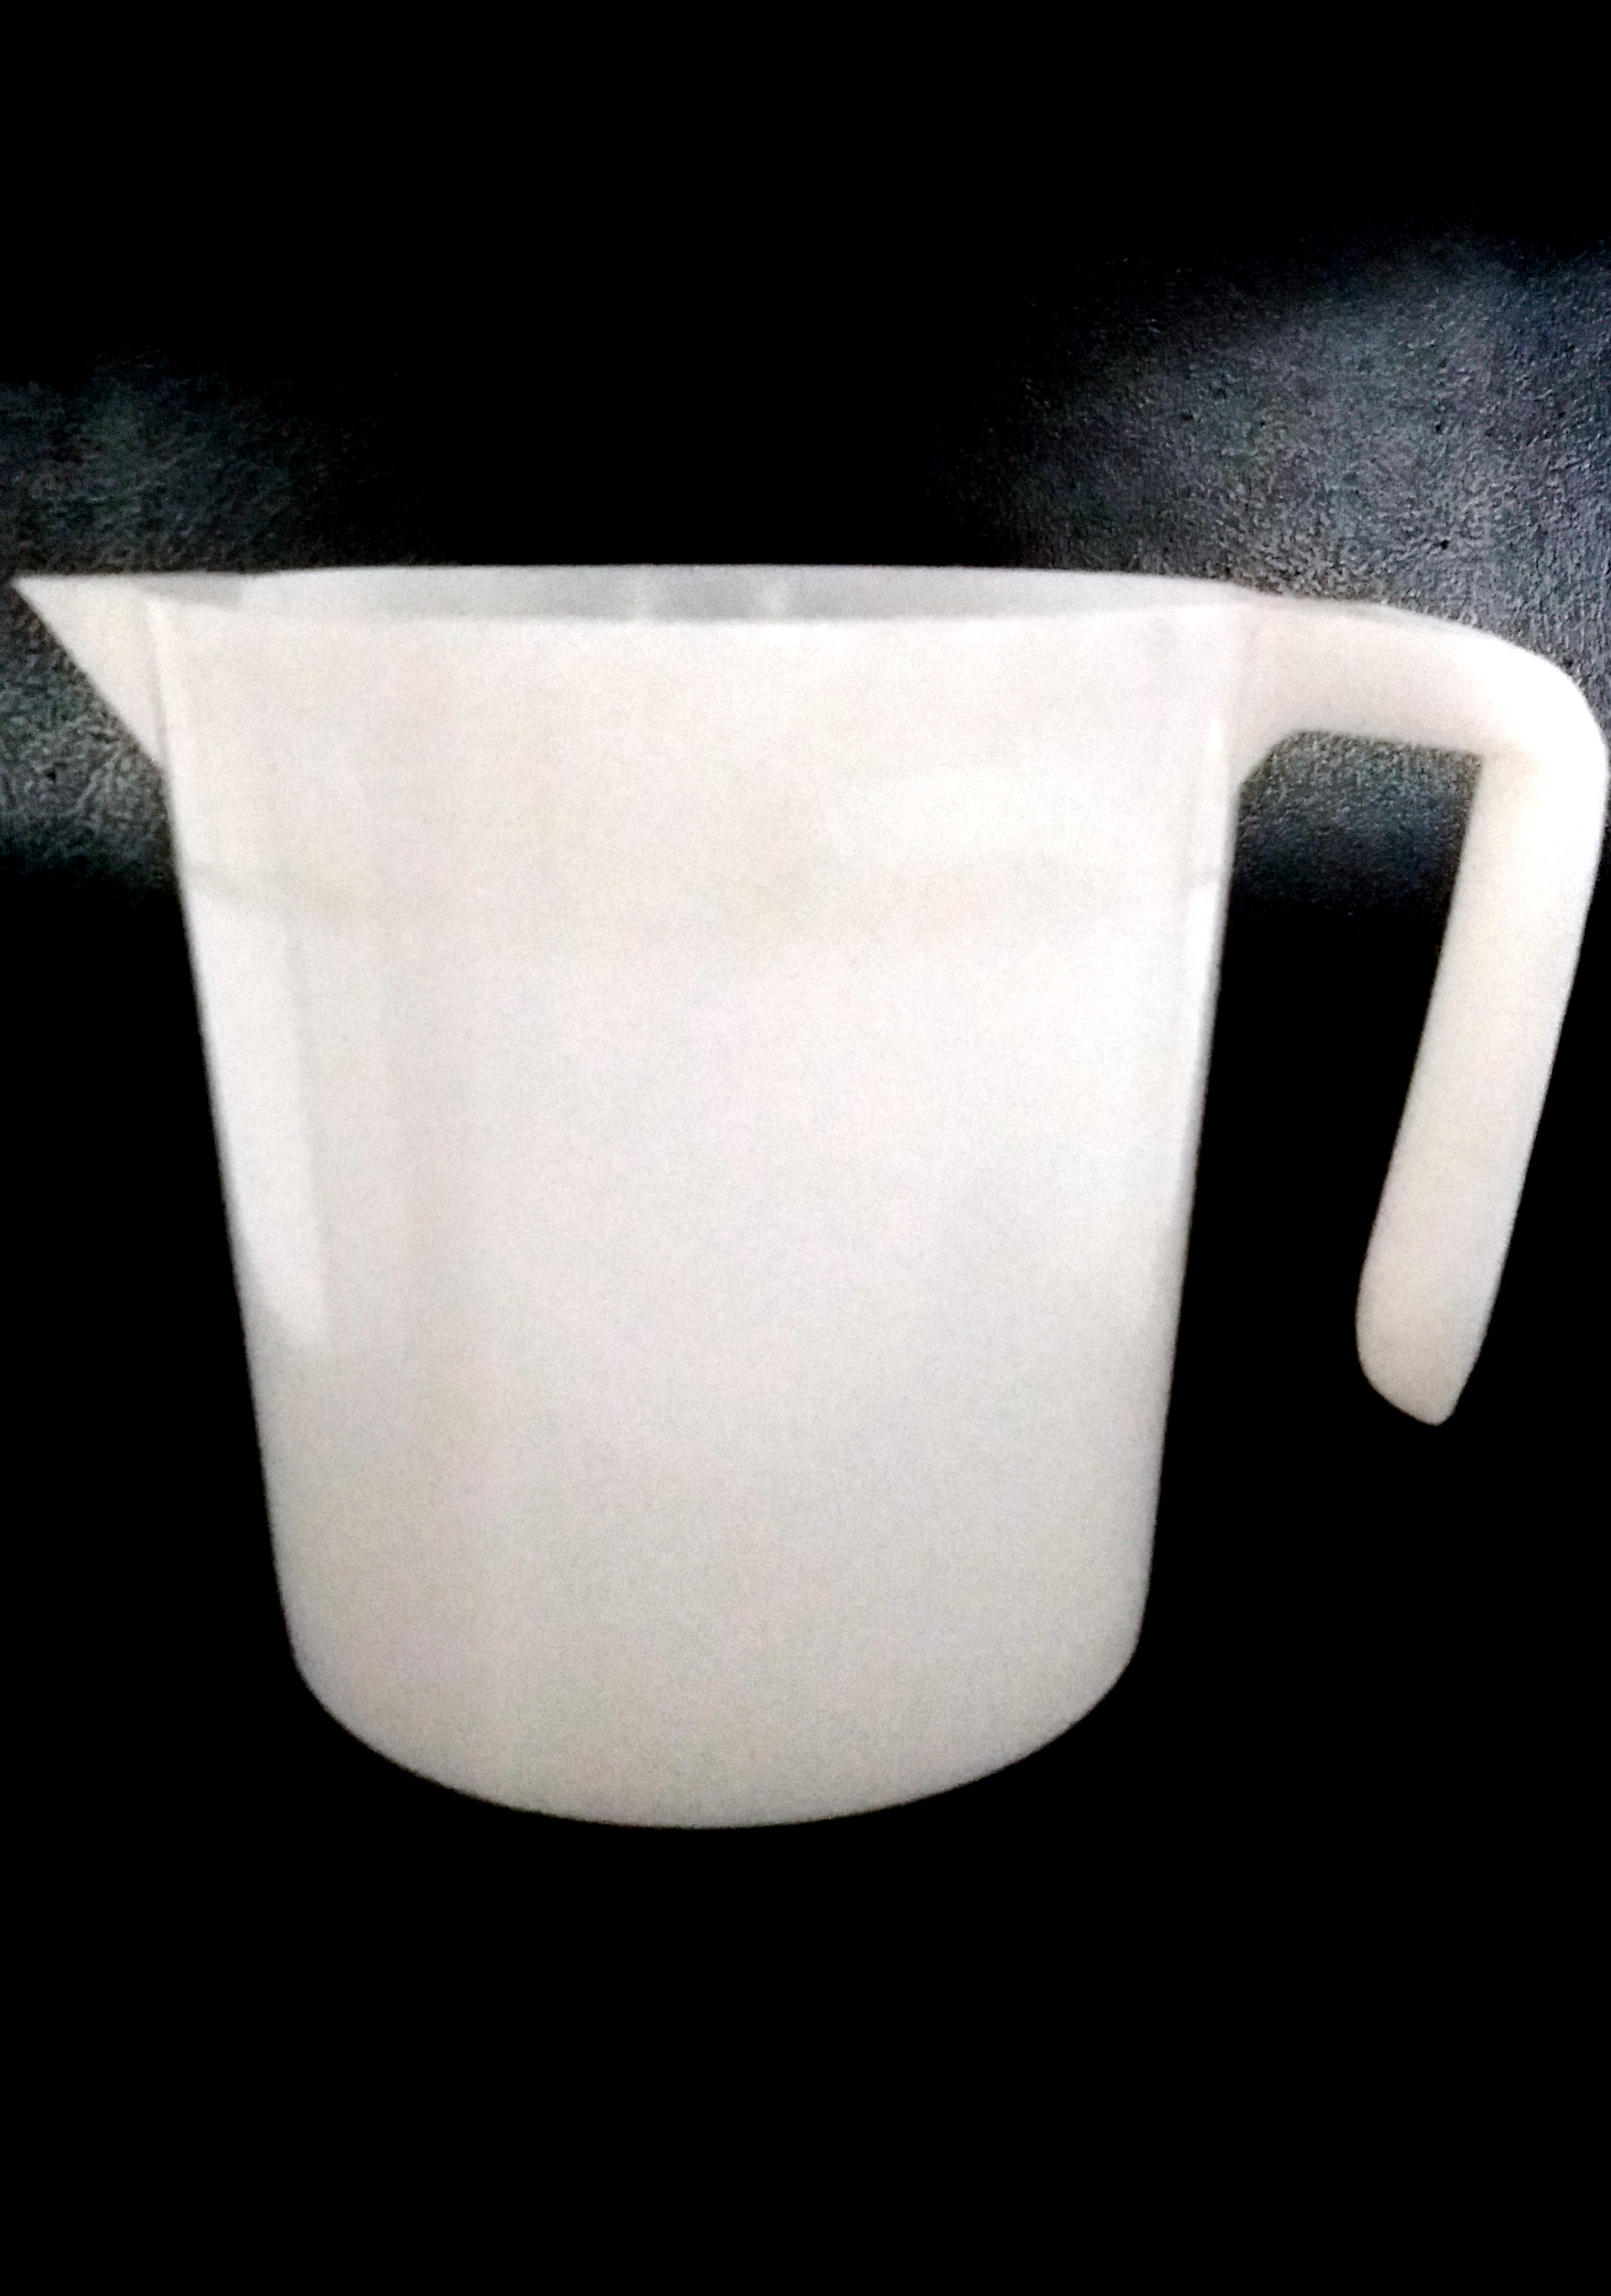 Milk jug, plastic